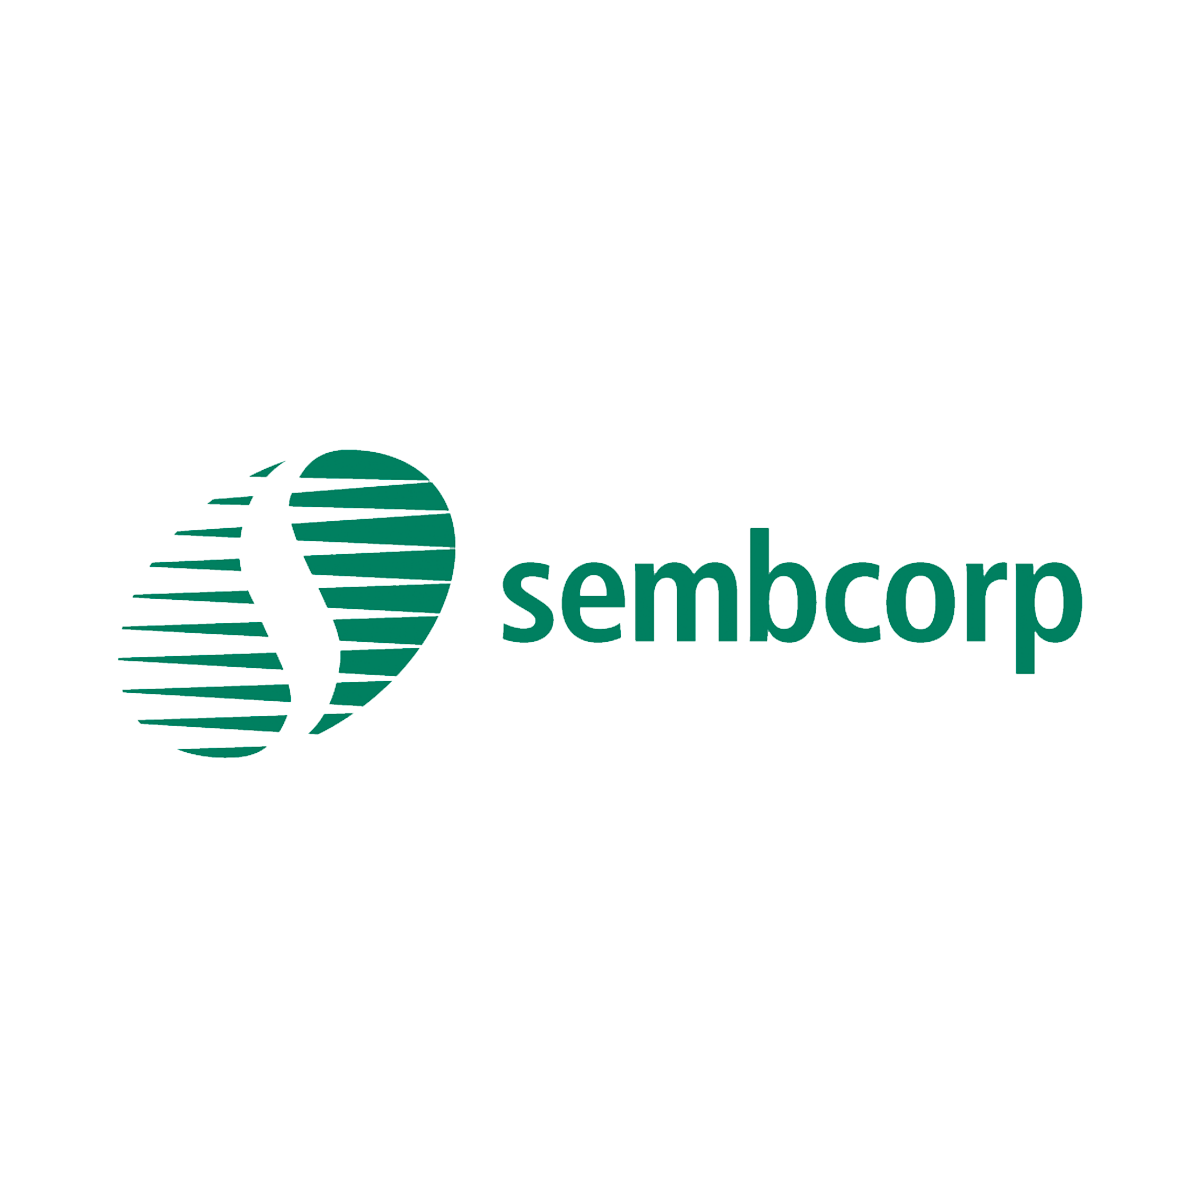 Sembcorp Development Ltd. company logo